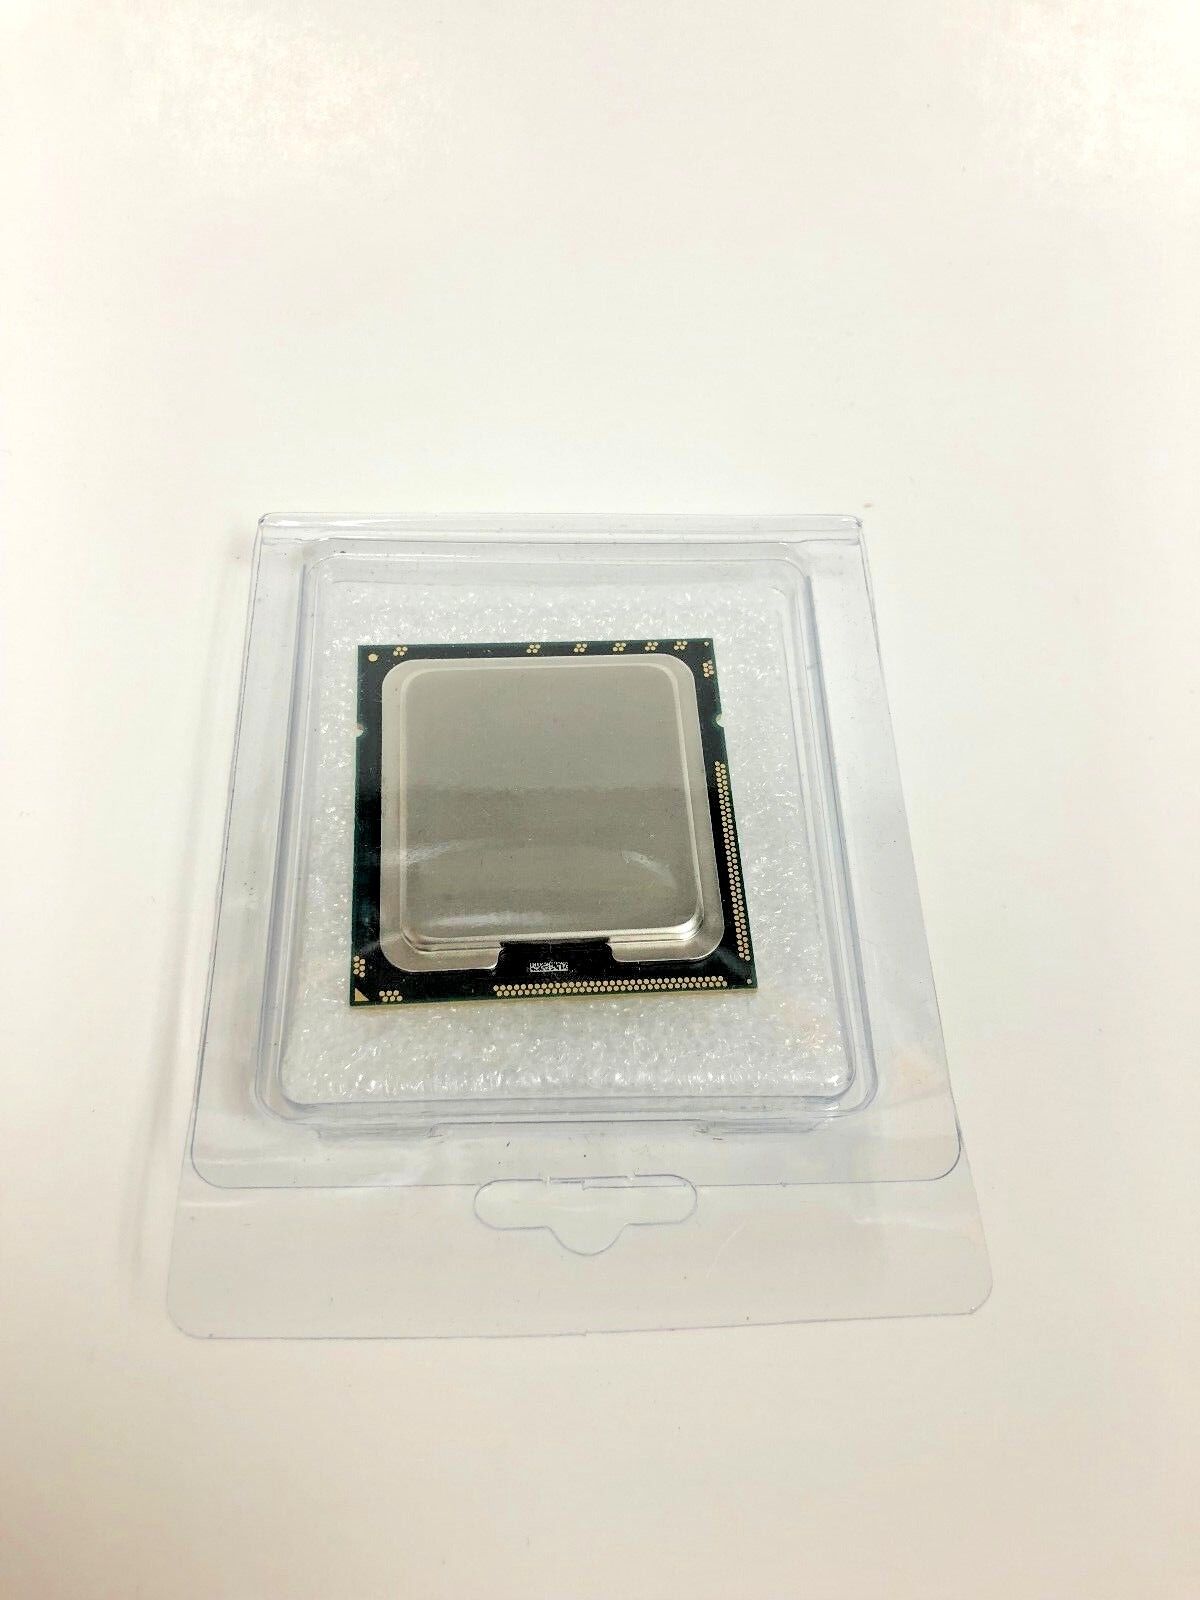 Intel Xeon X5680 3.33 GHz Six Core SLBV5 CPU Processor